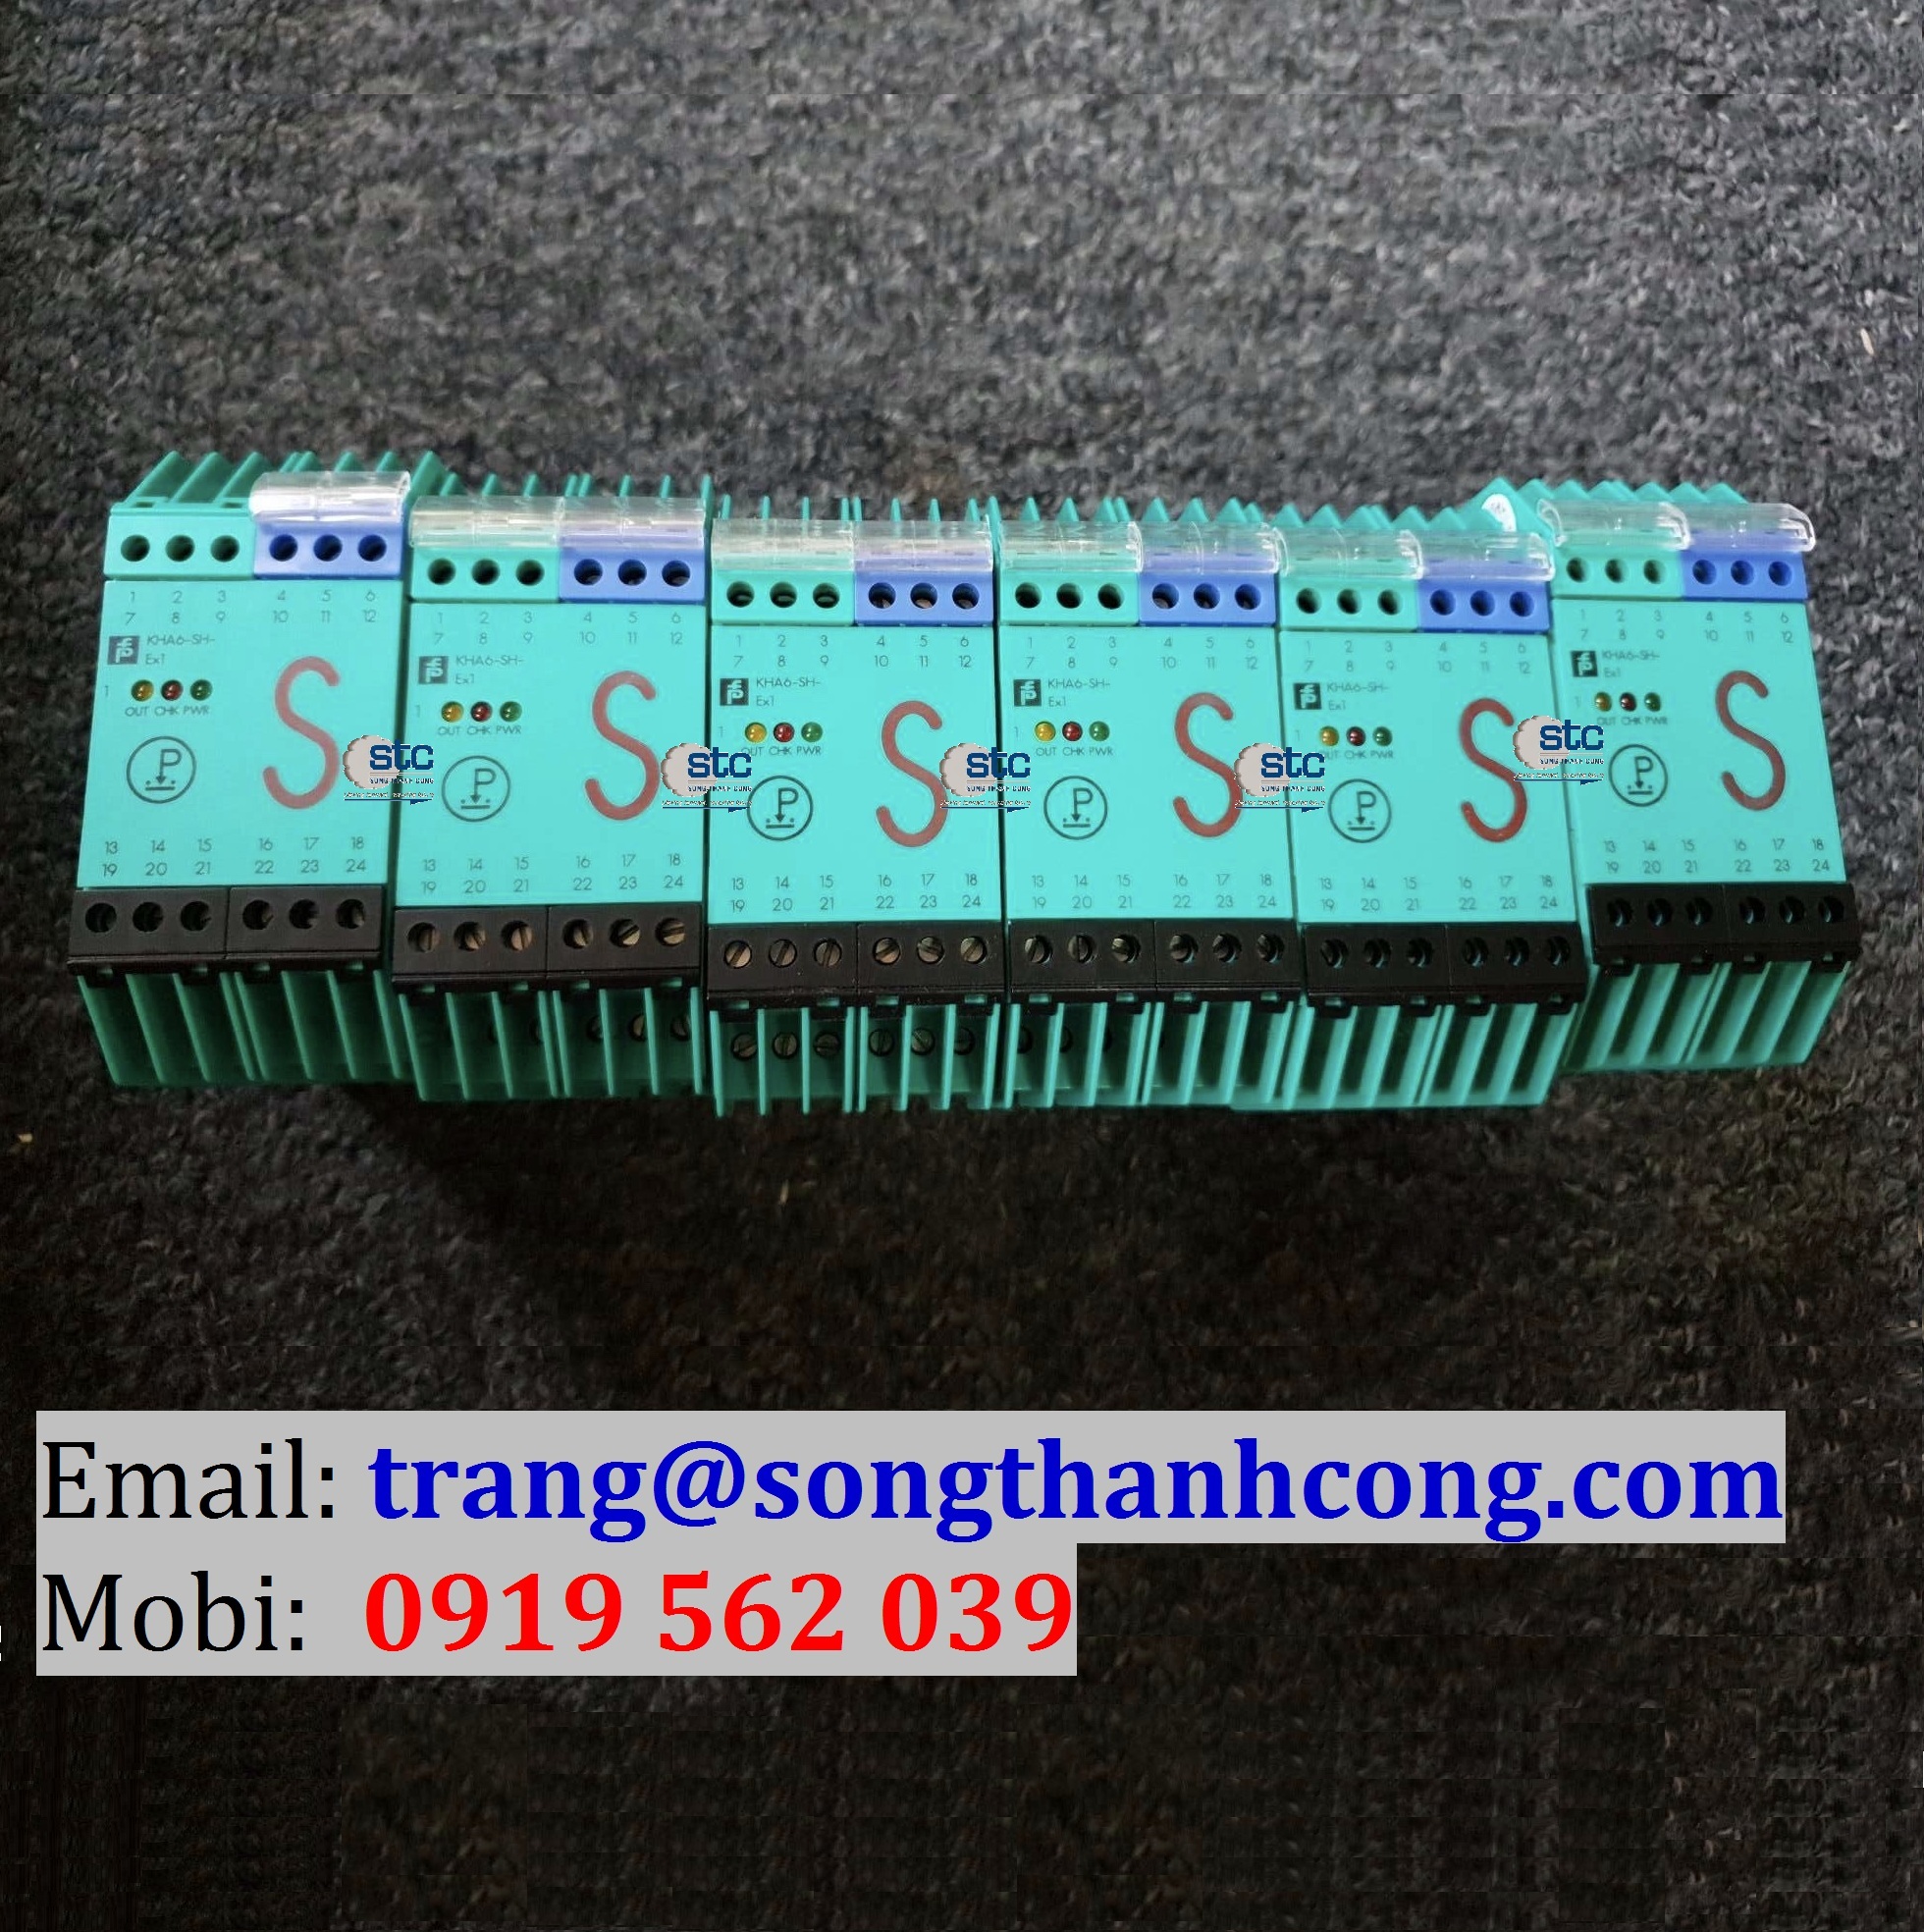 cong-tac-khuech-dai-switch-amplifier-13.png